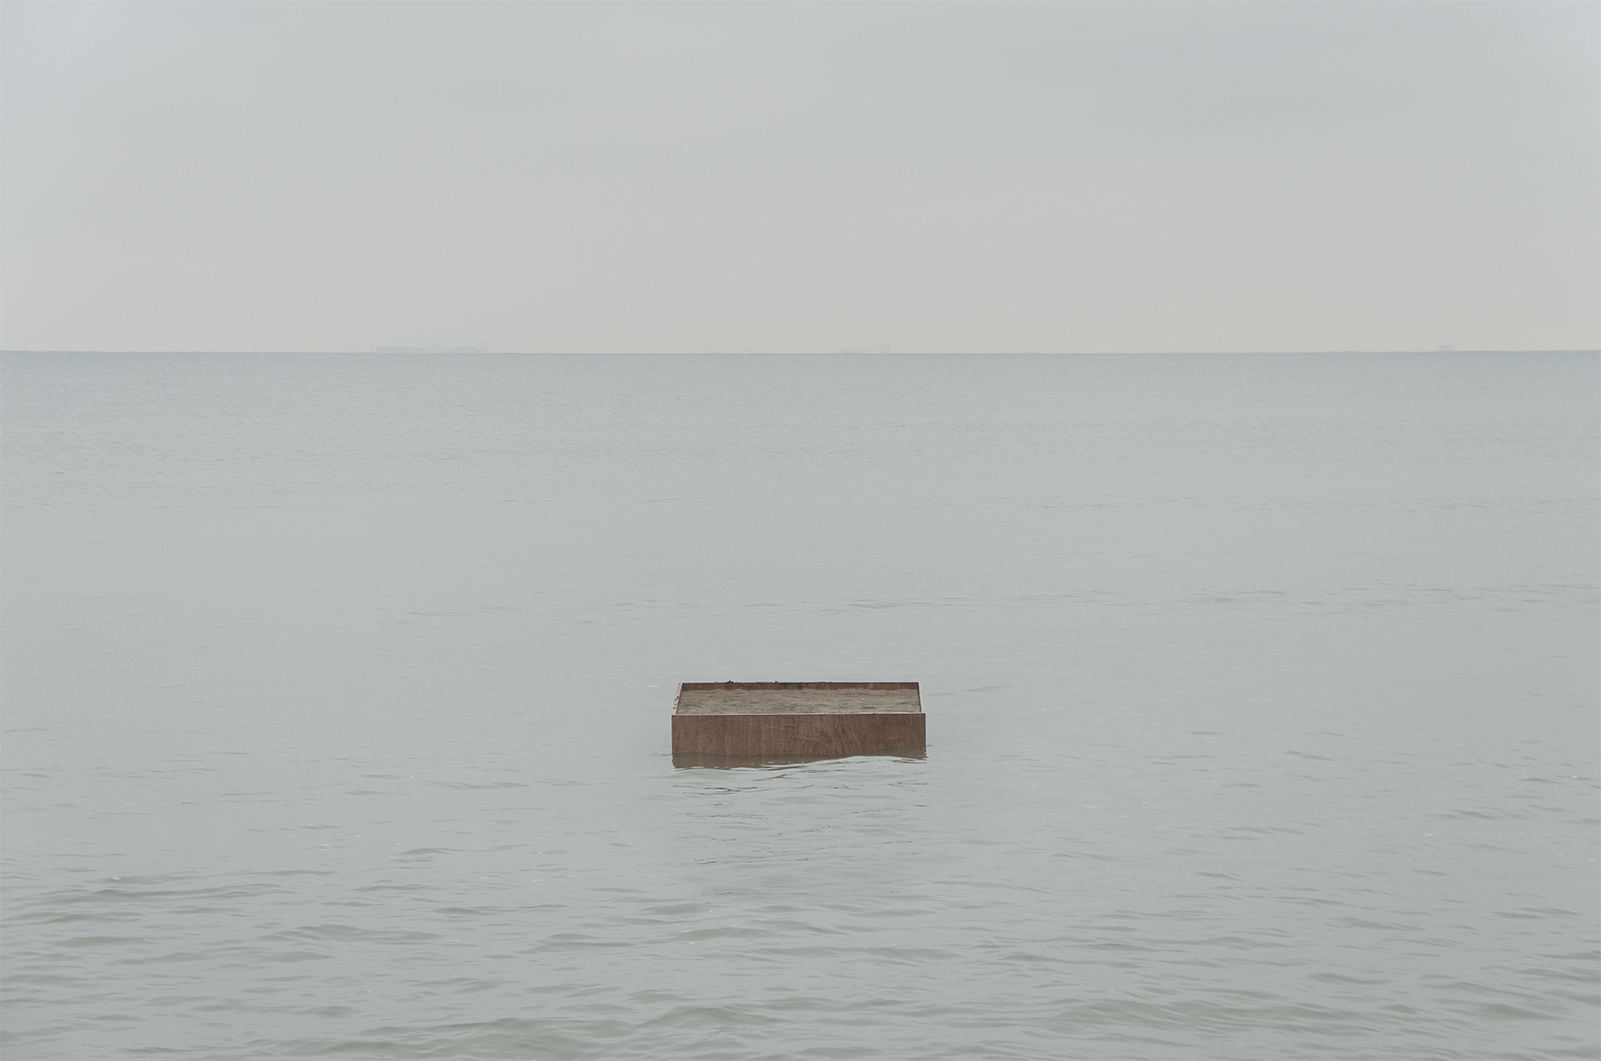 a floating wooden platform drifting